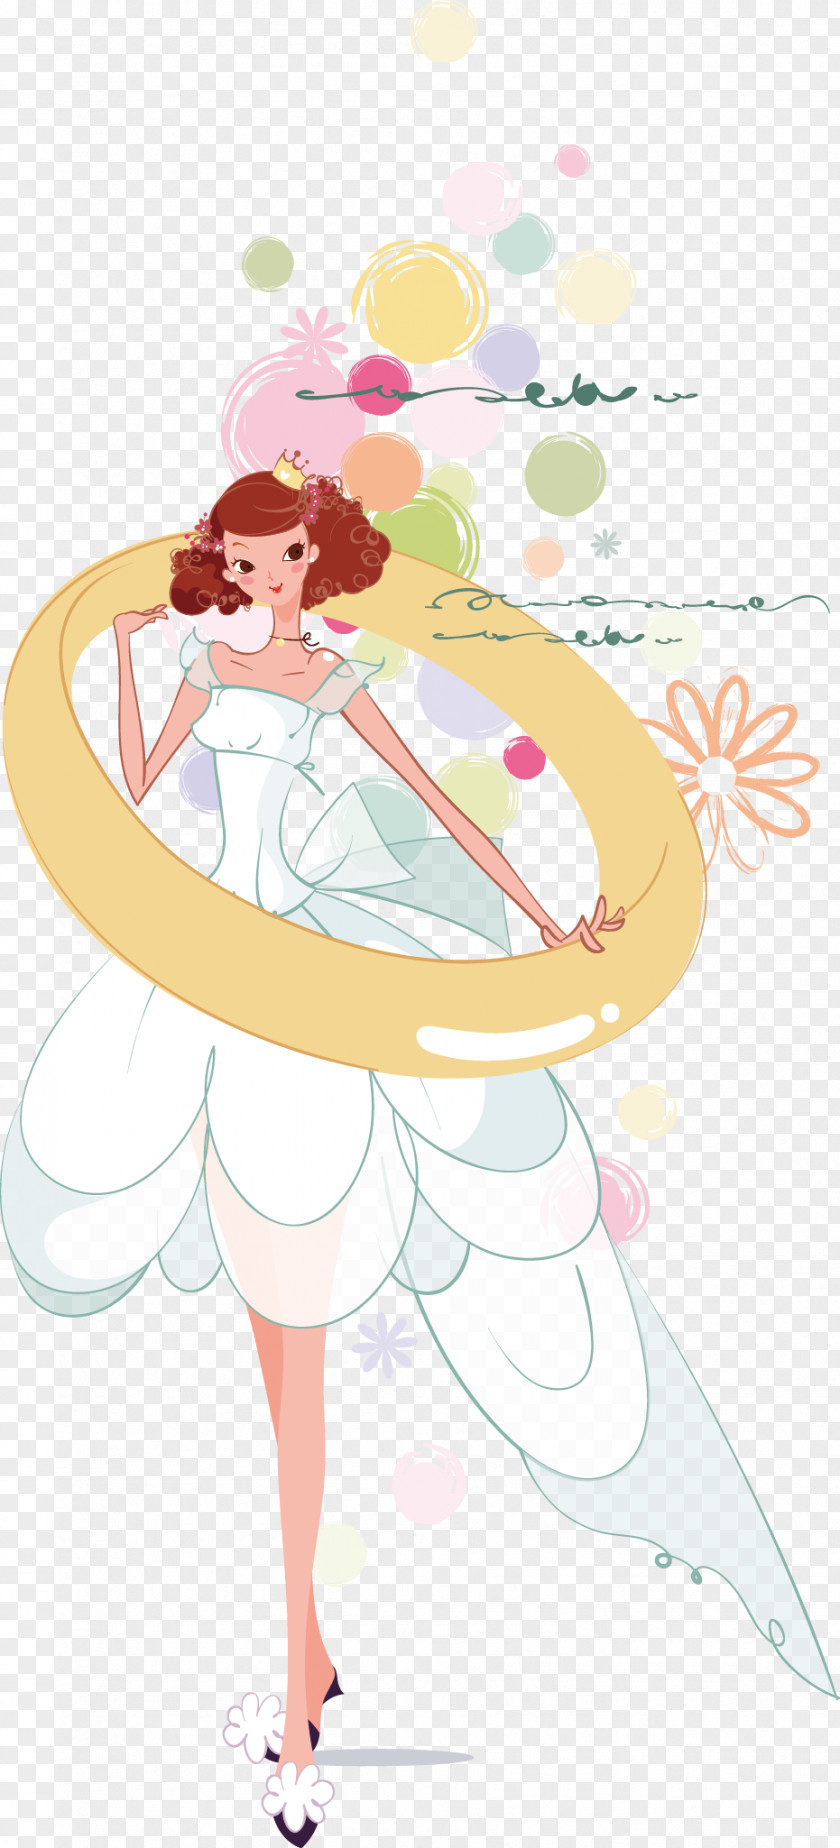 Princess Bride Marriage Illustration PNG